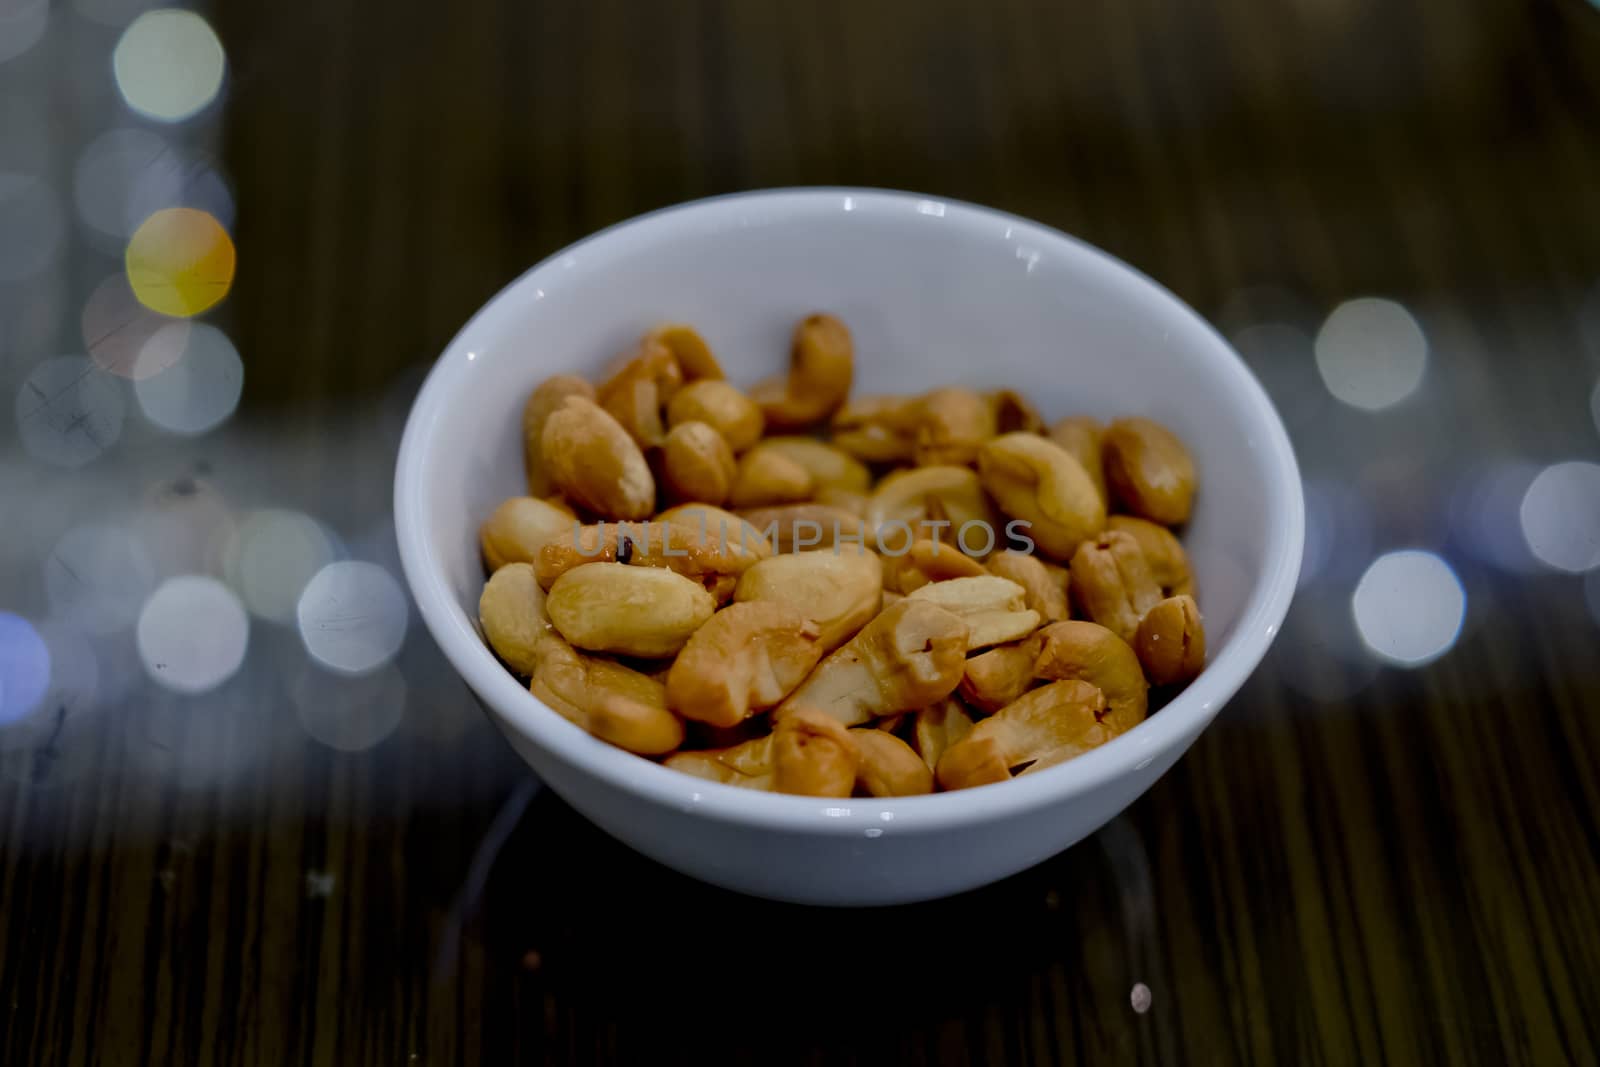 Roasted cashew nut with salt